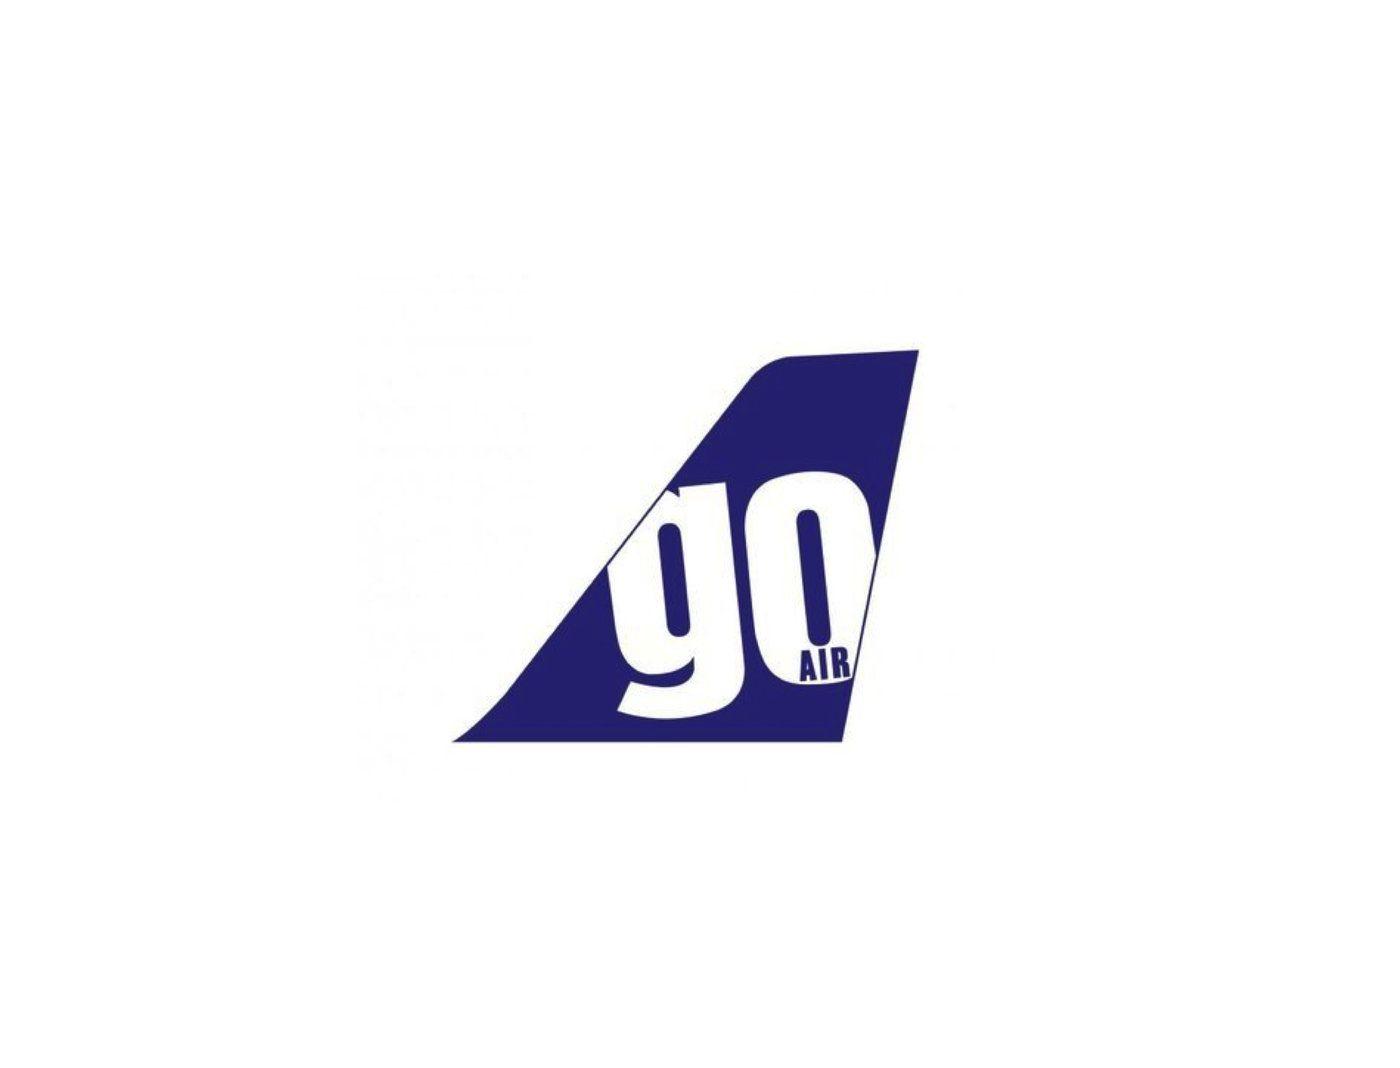 GoAir Logo - GoAir - Logo by Silent Partners at Coroflot.com